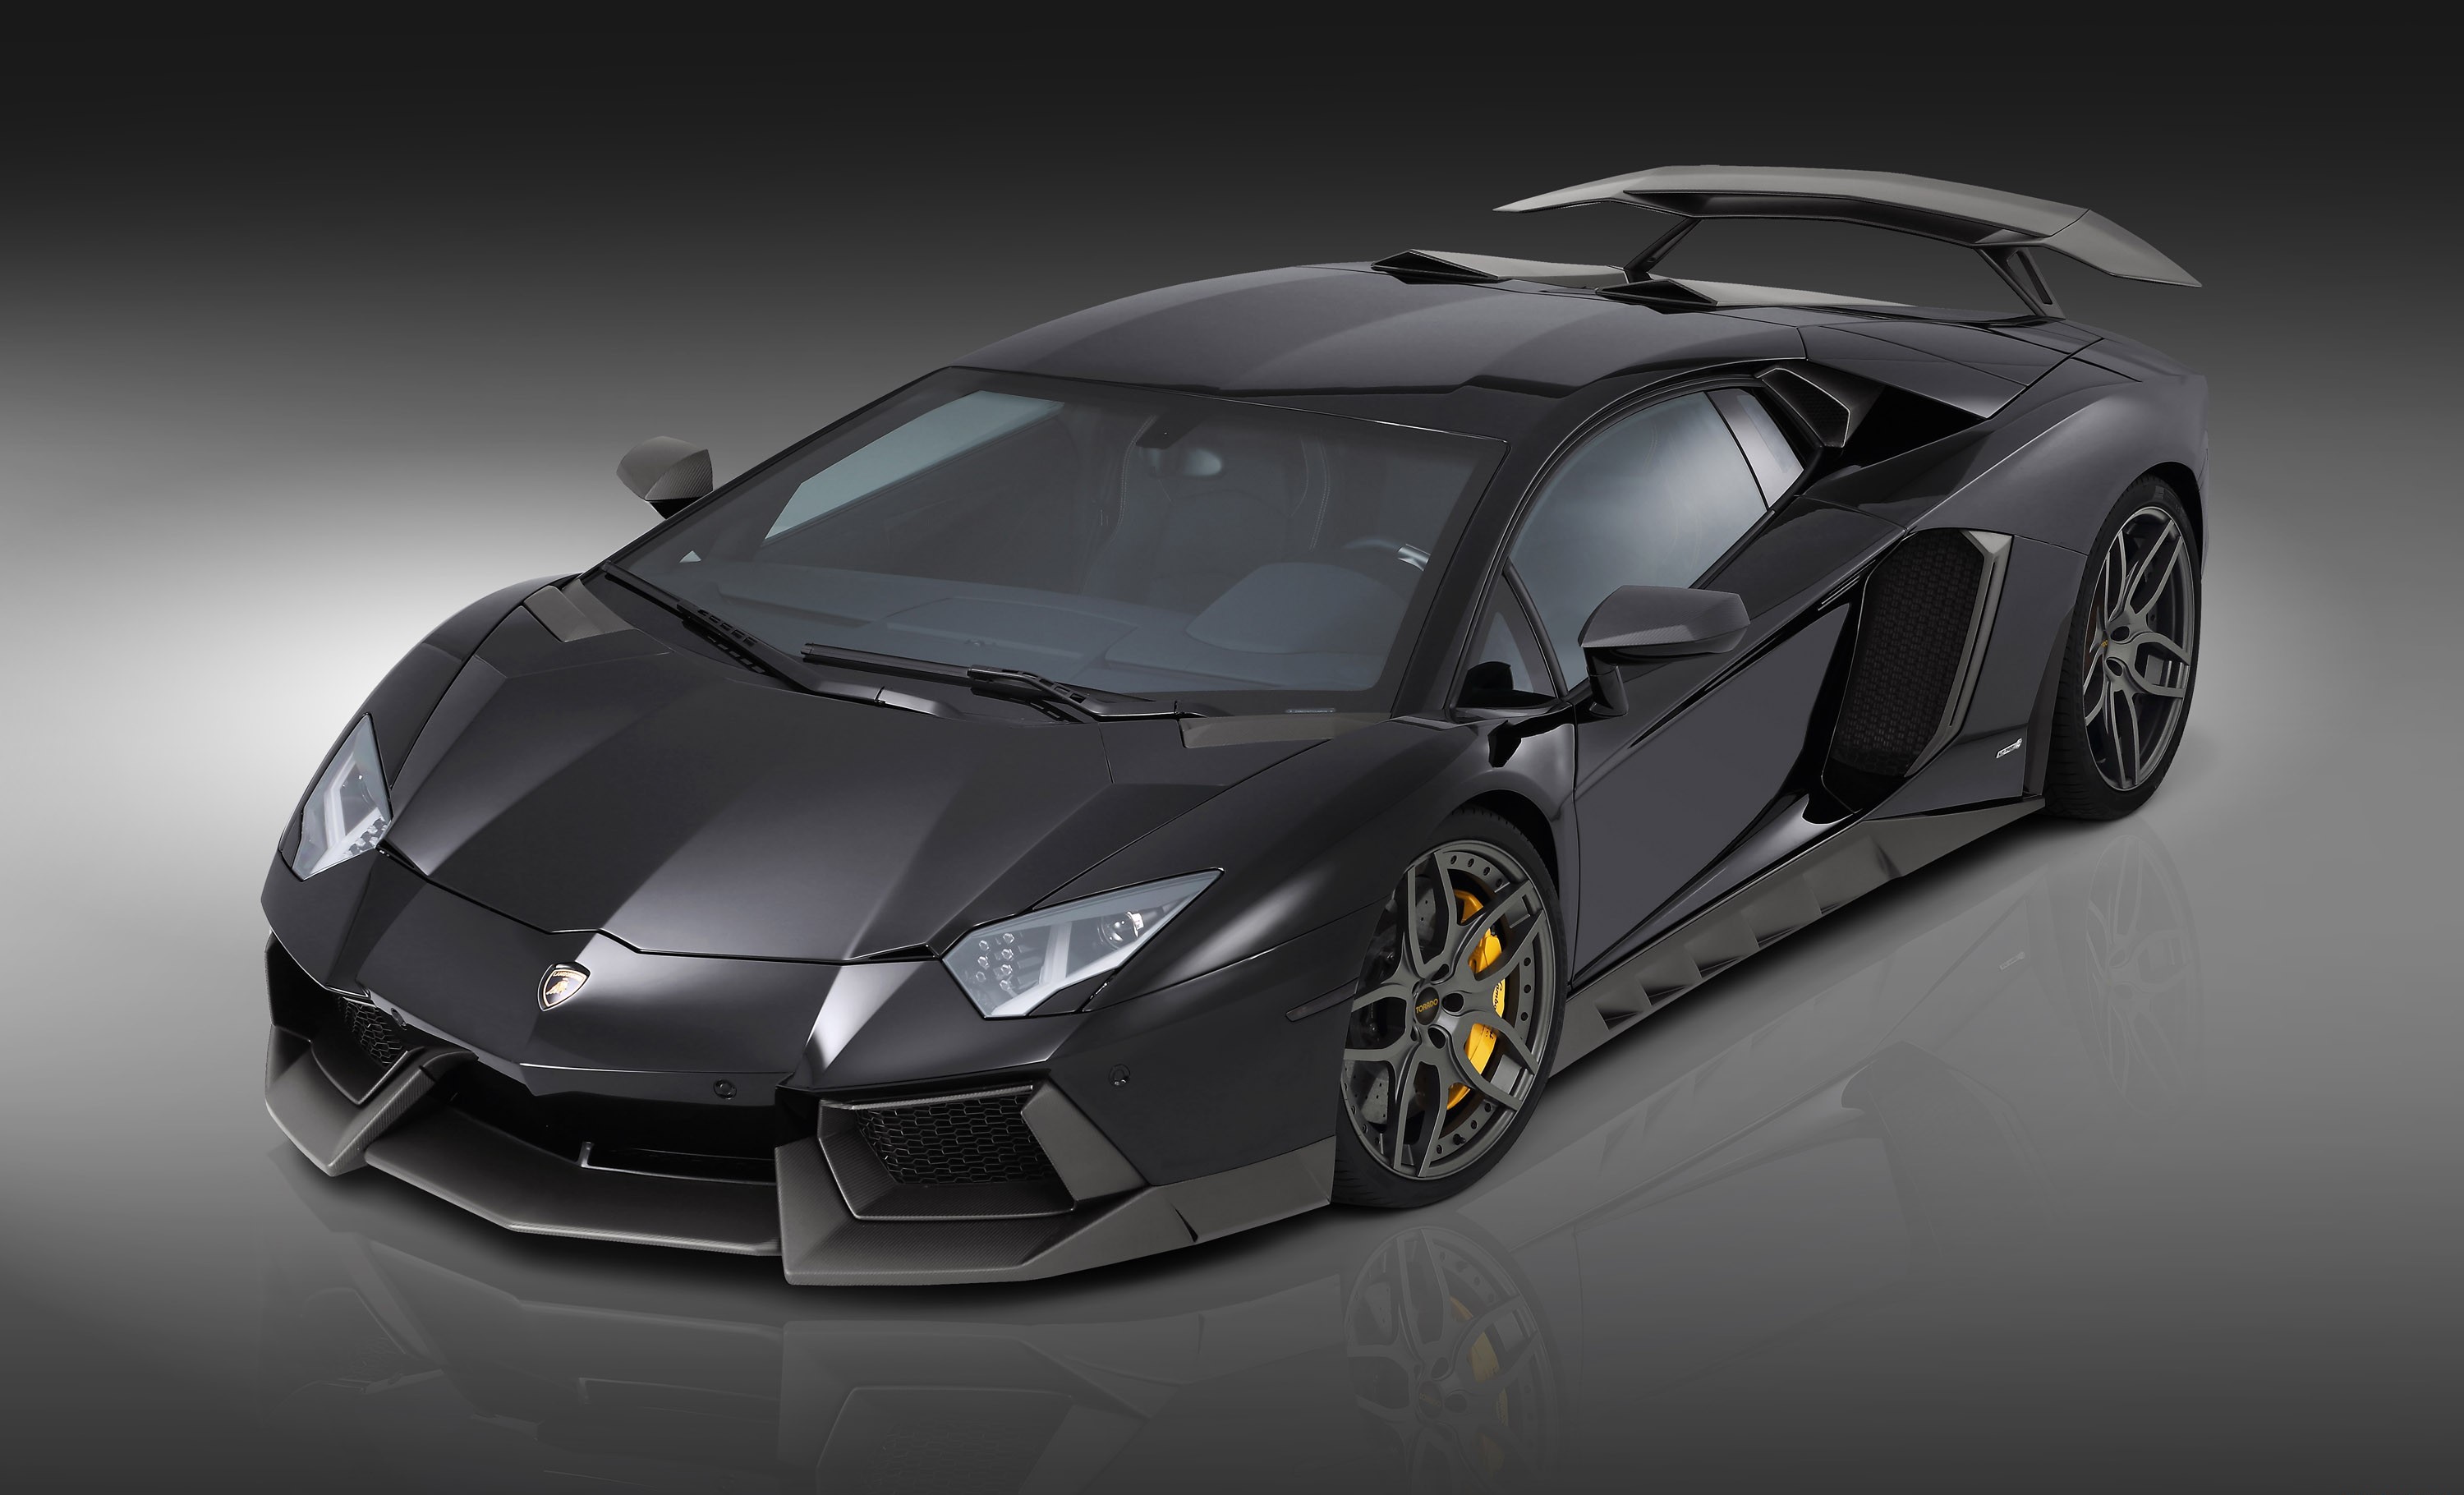 Laden Sie das Lamborghini, Lamborghini Aventador Lp700 4, Fahrzeuge-Bild kostenlos auf Ihren PC-Desktop herunter